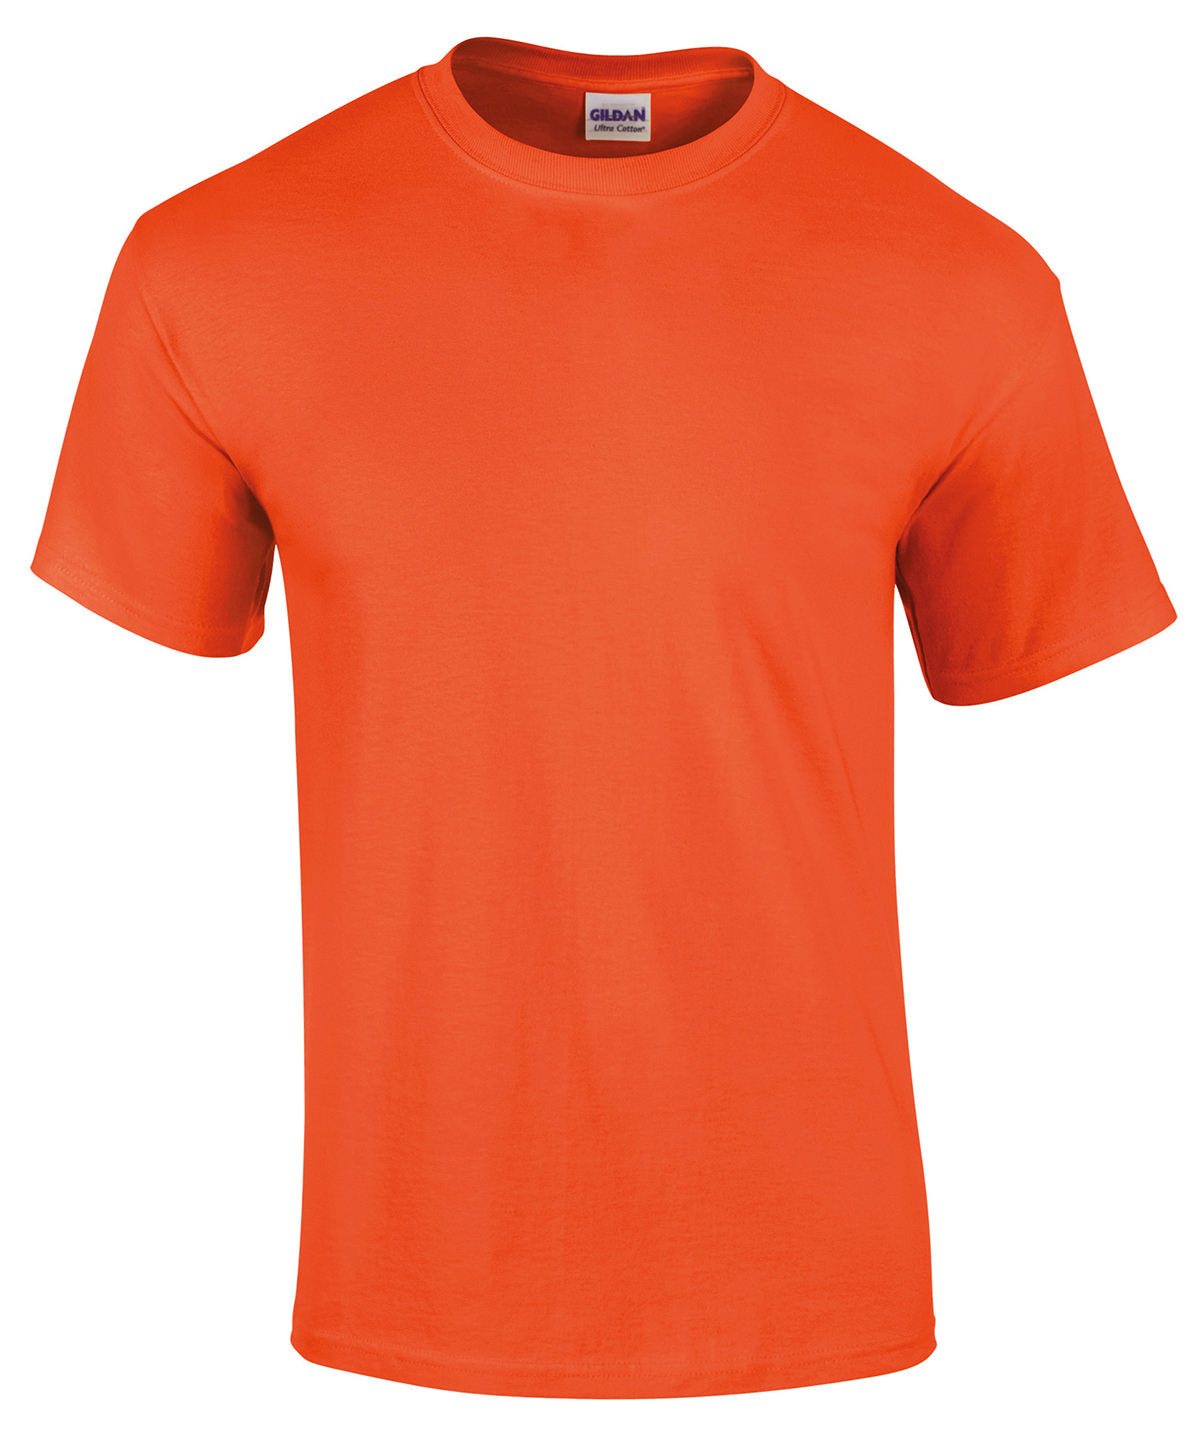 Personalised T-Shirts - Light Green Gildan Ultra Cotton™ adult t-shirt